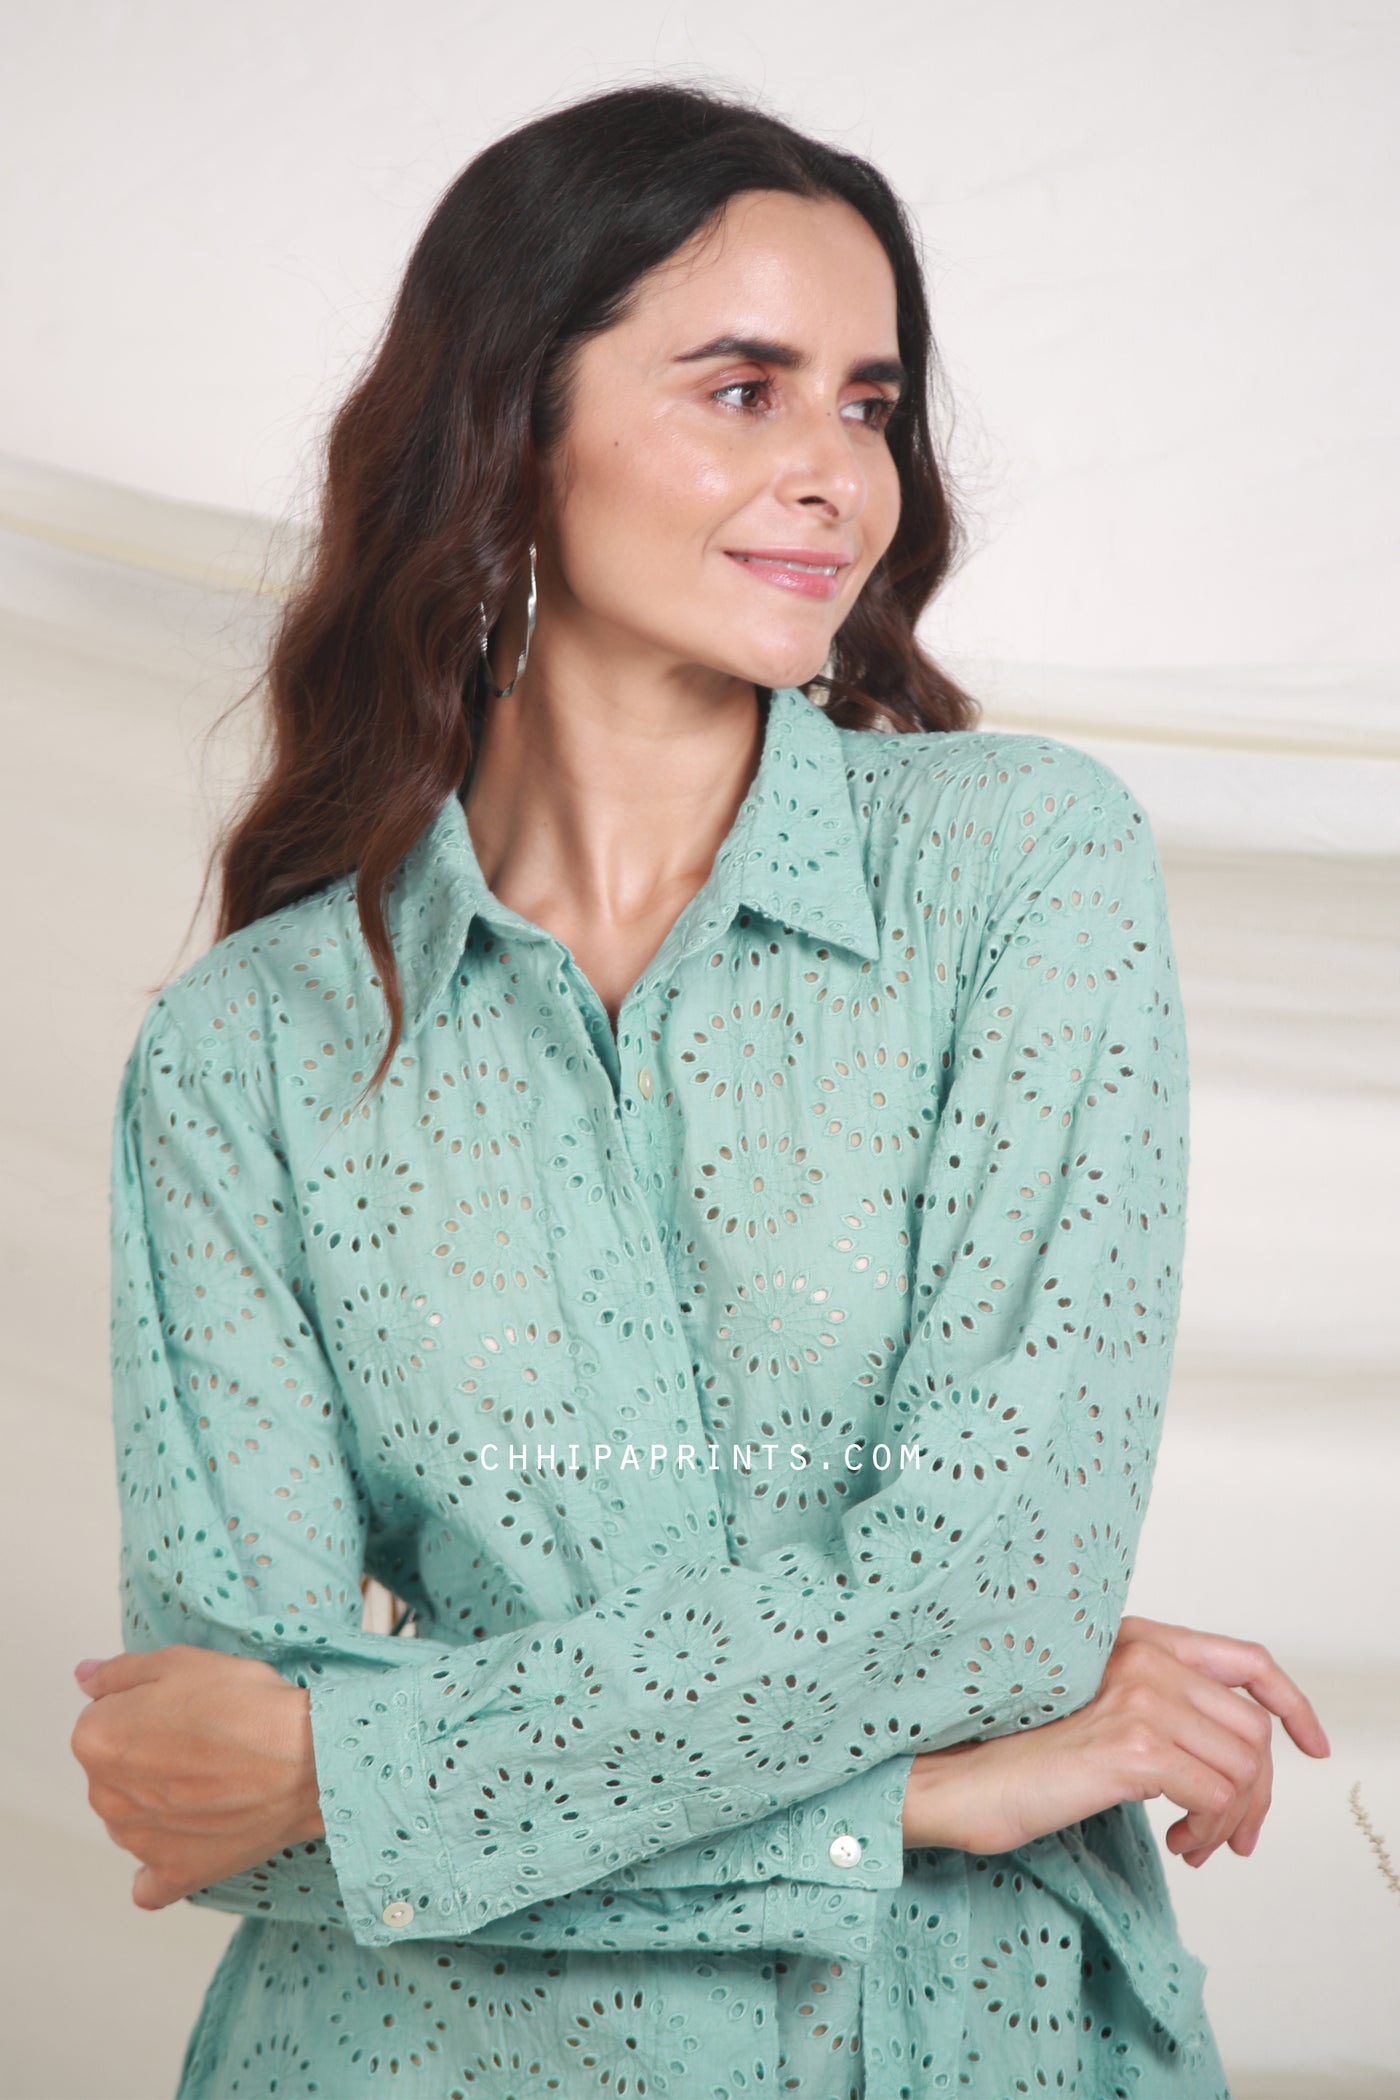 Cotton Schiffli Embroidery Shirt Dress in Teal Green